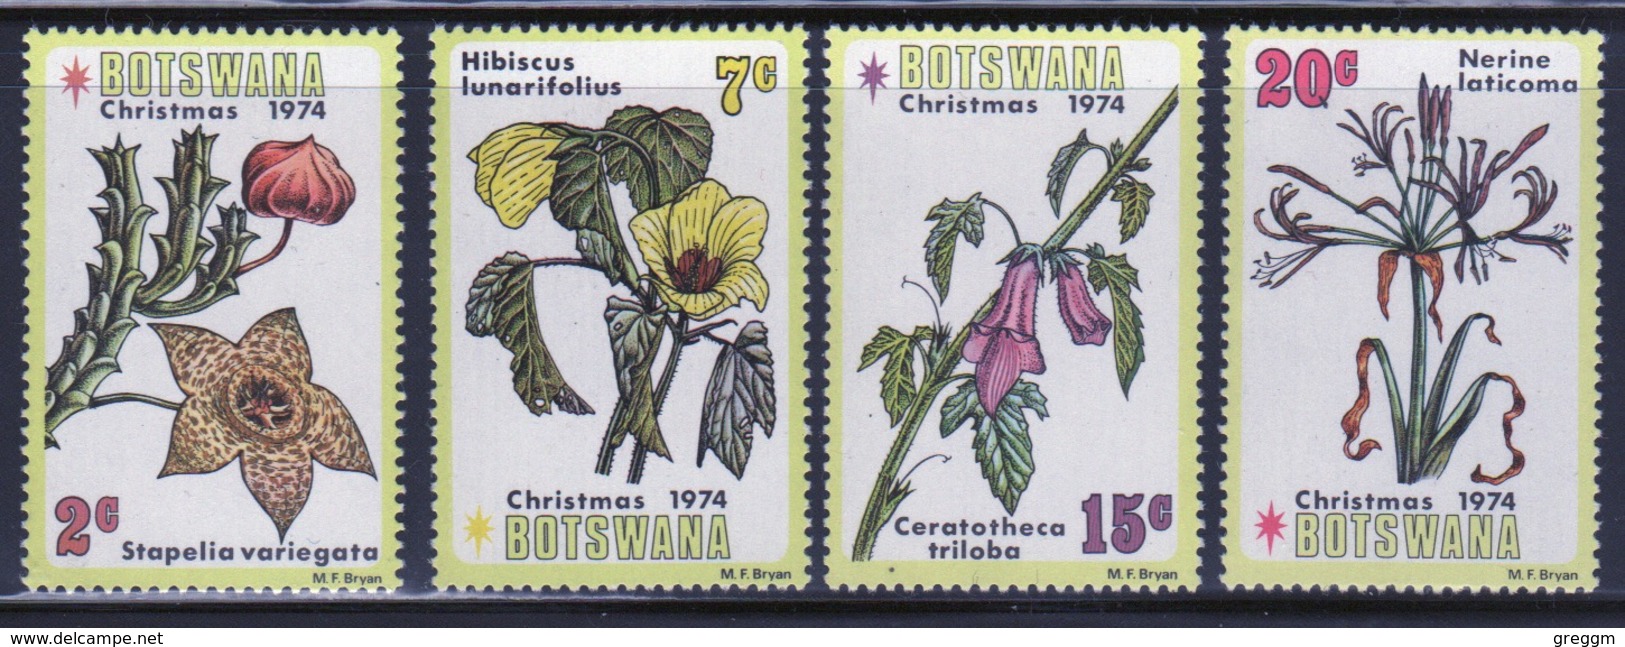 Botswana Set Of Stamps From 1974 To Celebrate Christmas. - Botswana (1966-...)